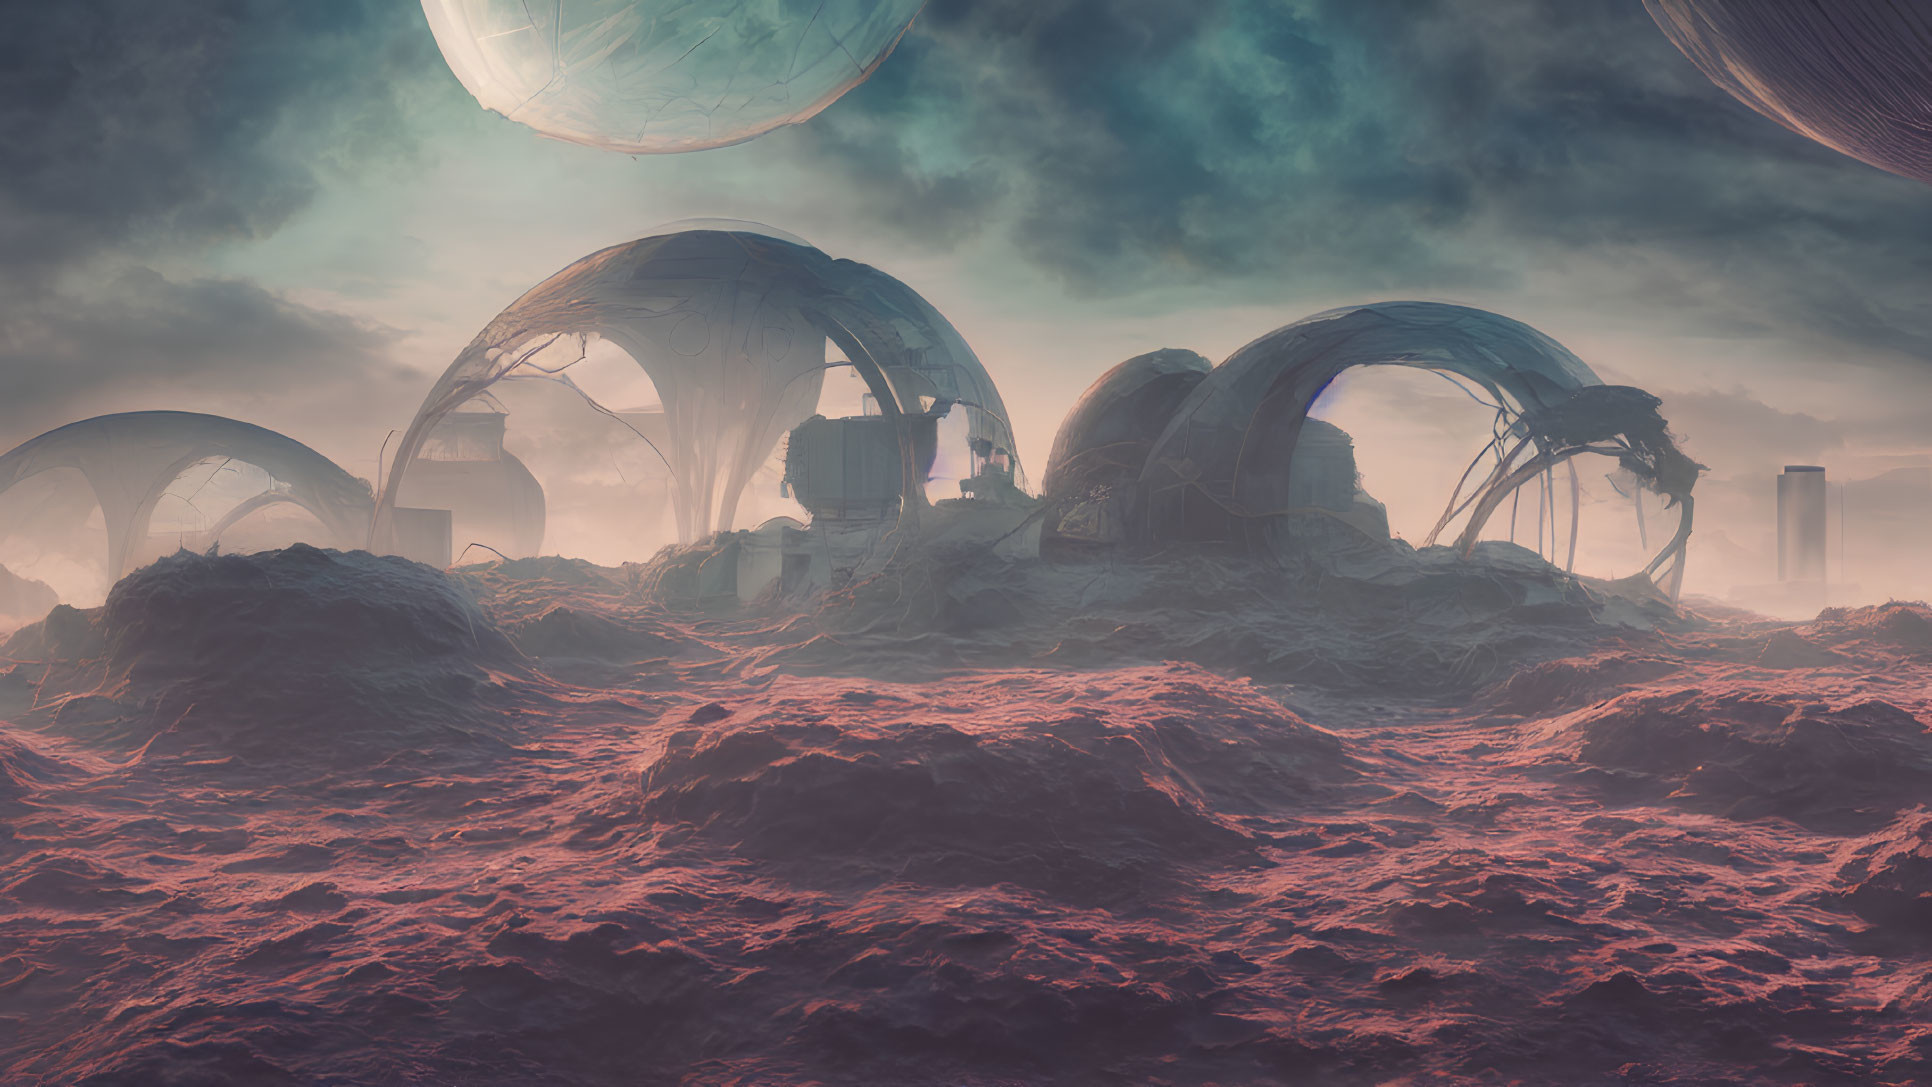 Alien settlement with dome structures on barren rocky landscape